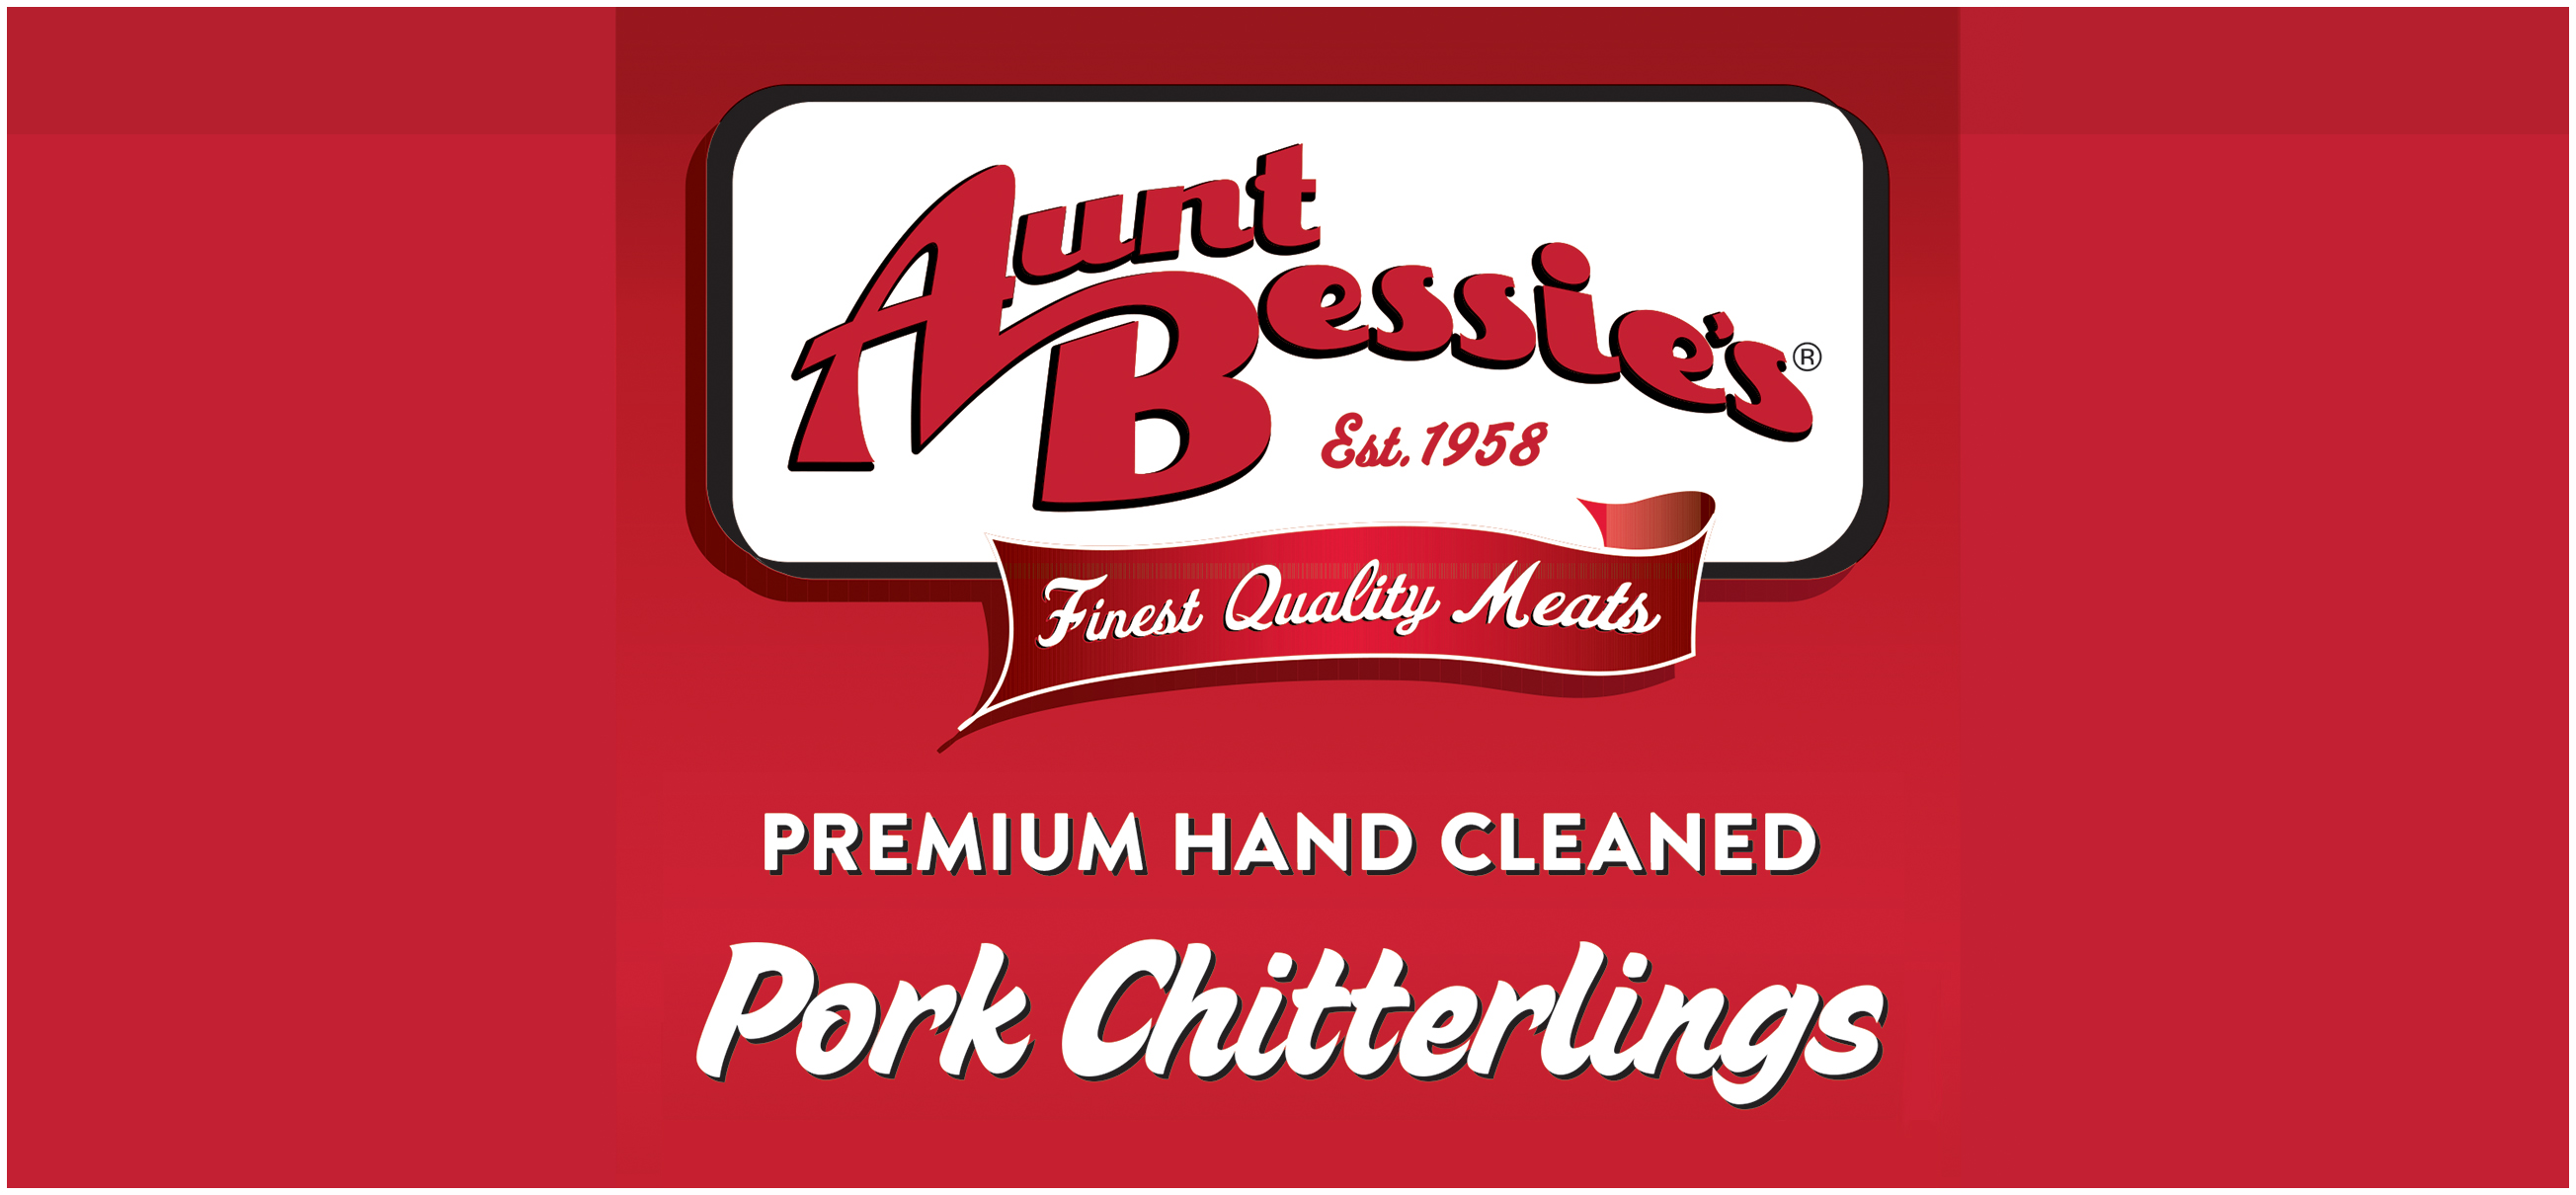 Aunt Bessie's Chitterlings - Premium Hand Cleaned Pork Chitterlings